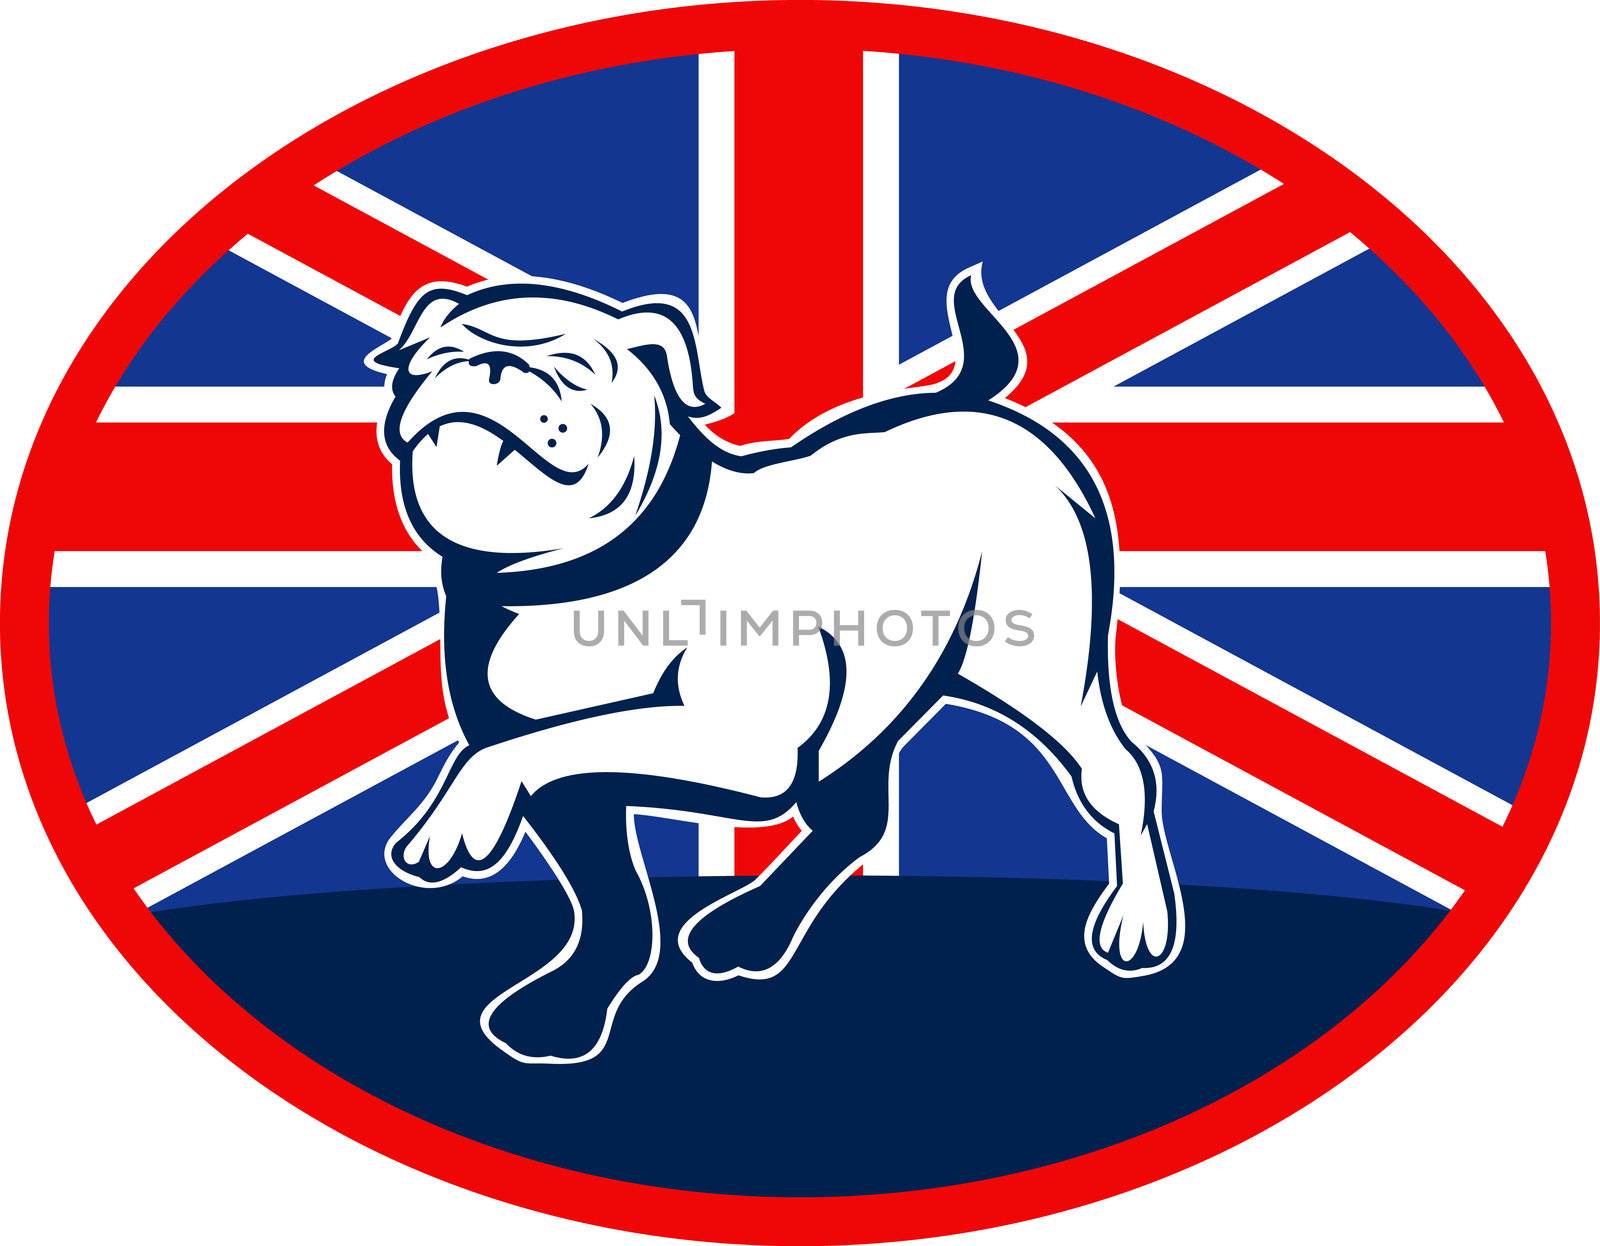 Proud English bulldog marching with British flag by patrimonio